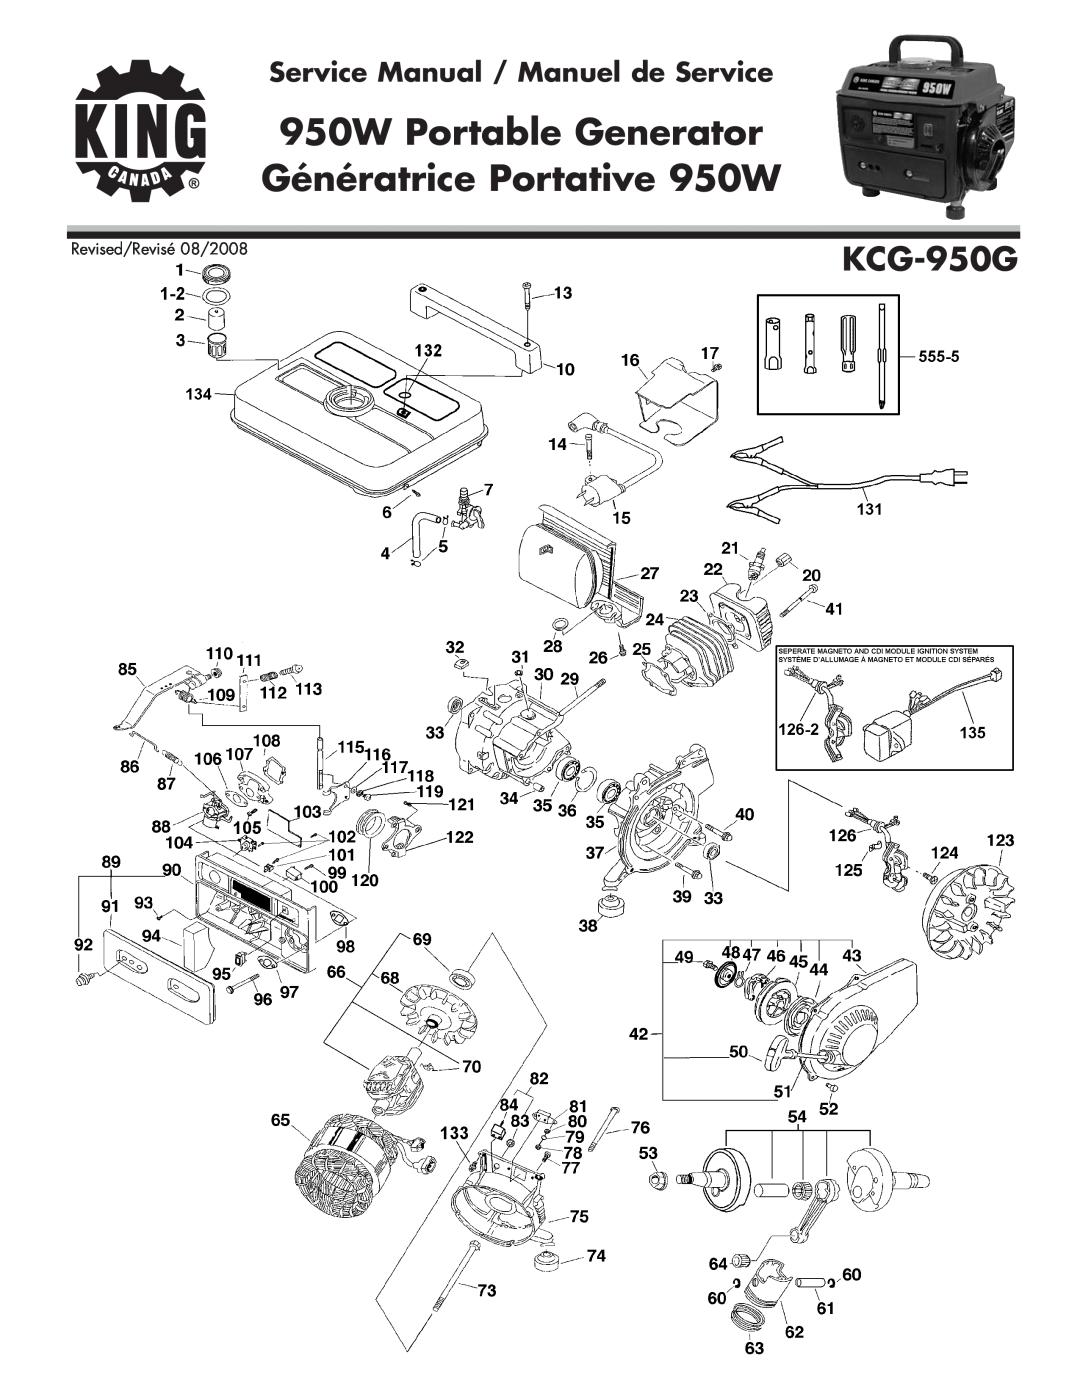 King Canada KCG-950G service manual 950W Portable Generator, Génératrice Portative 950W, Revised/Revisé 08/2008 